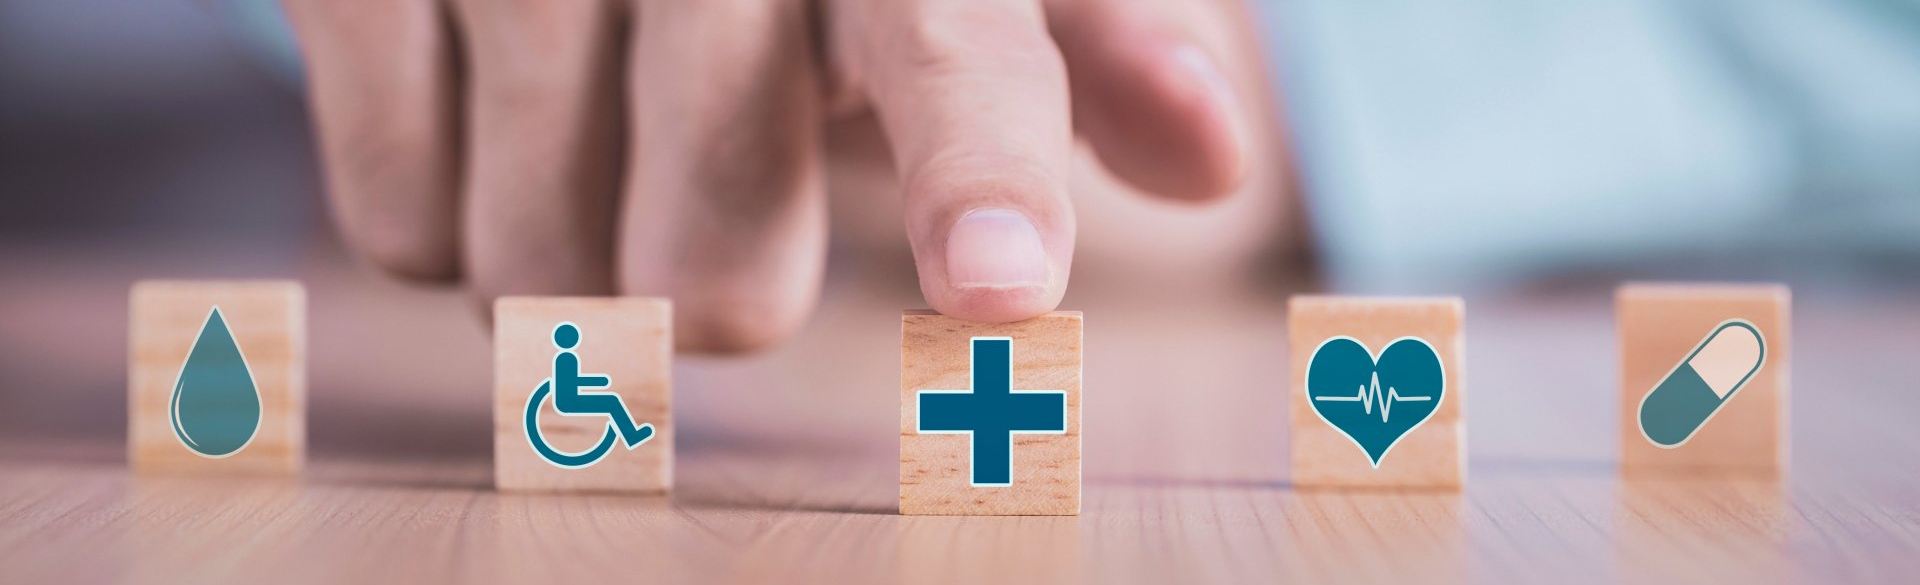 Man Chooses an Healthcare Medical Symbol on Wooden Block